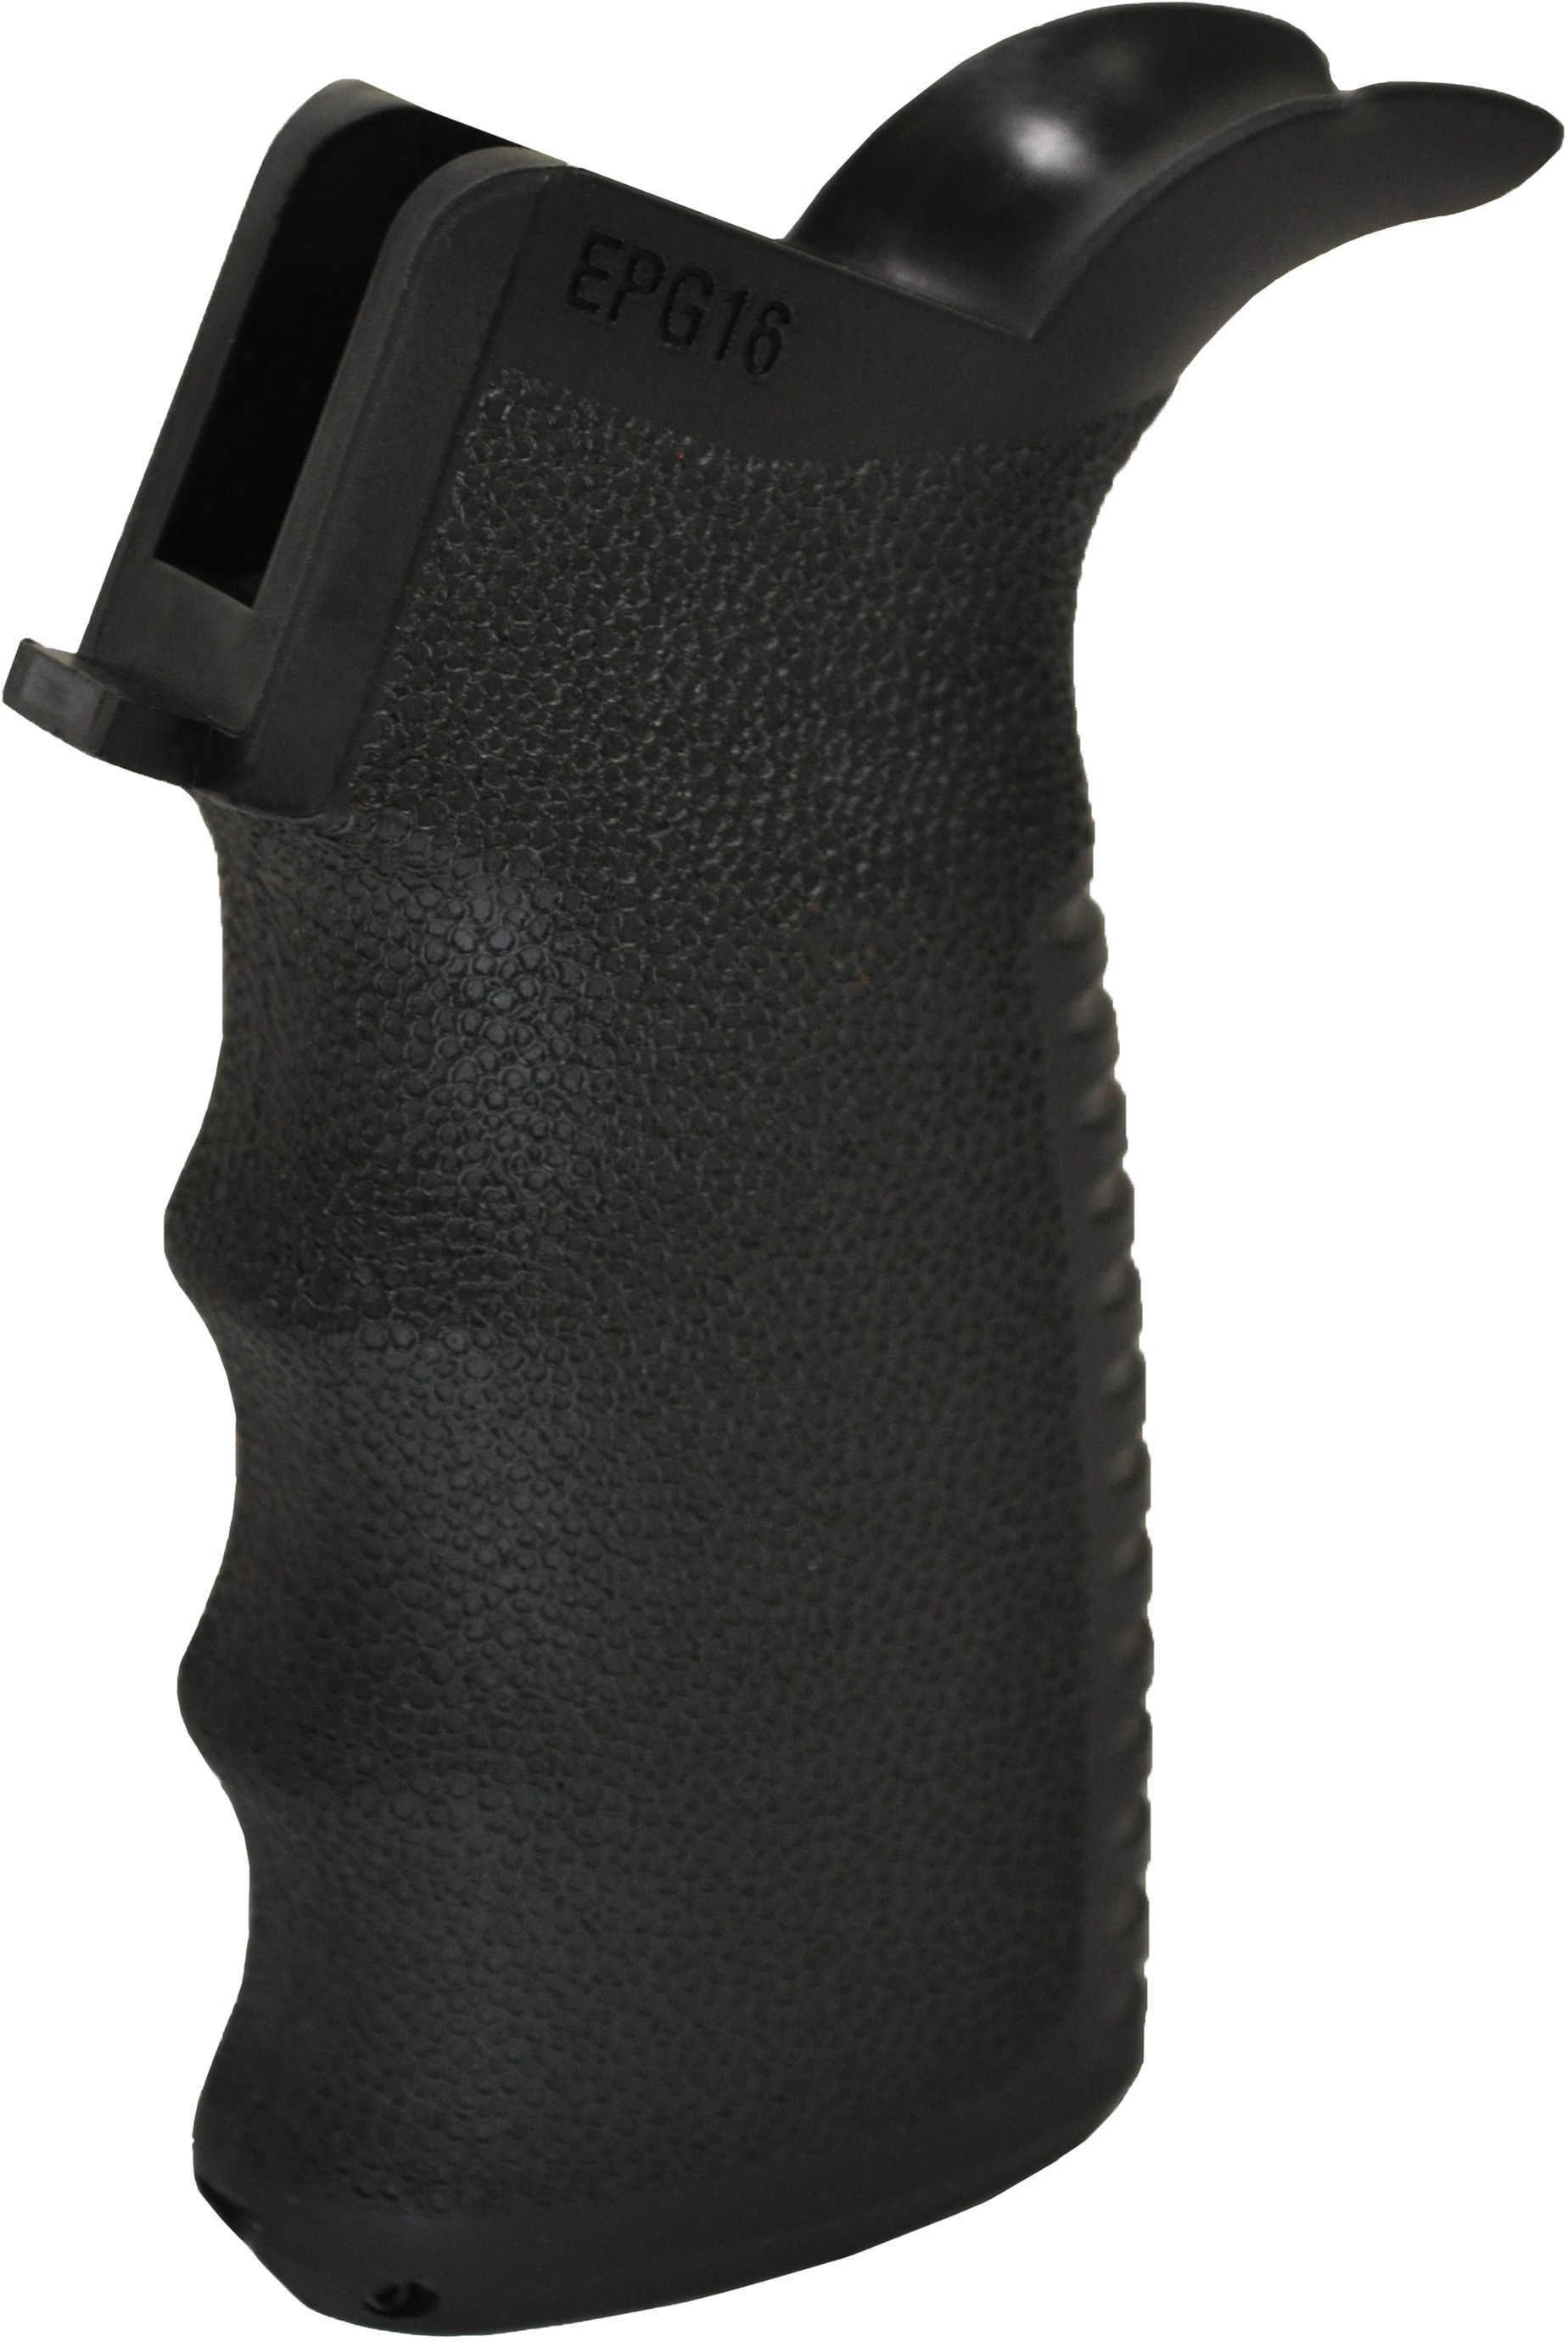 Bushmaster Firearms Enhanced Pistol Grip AR-15 Textured Black Polymer 93392